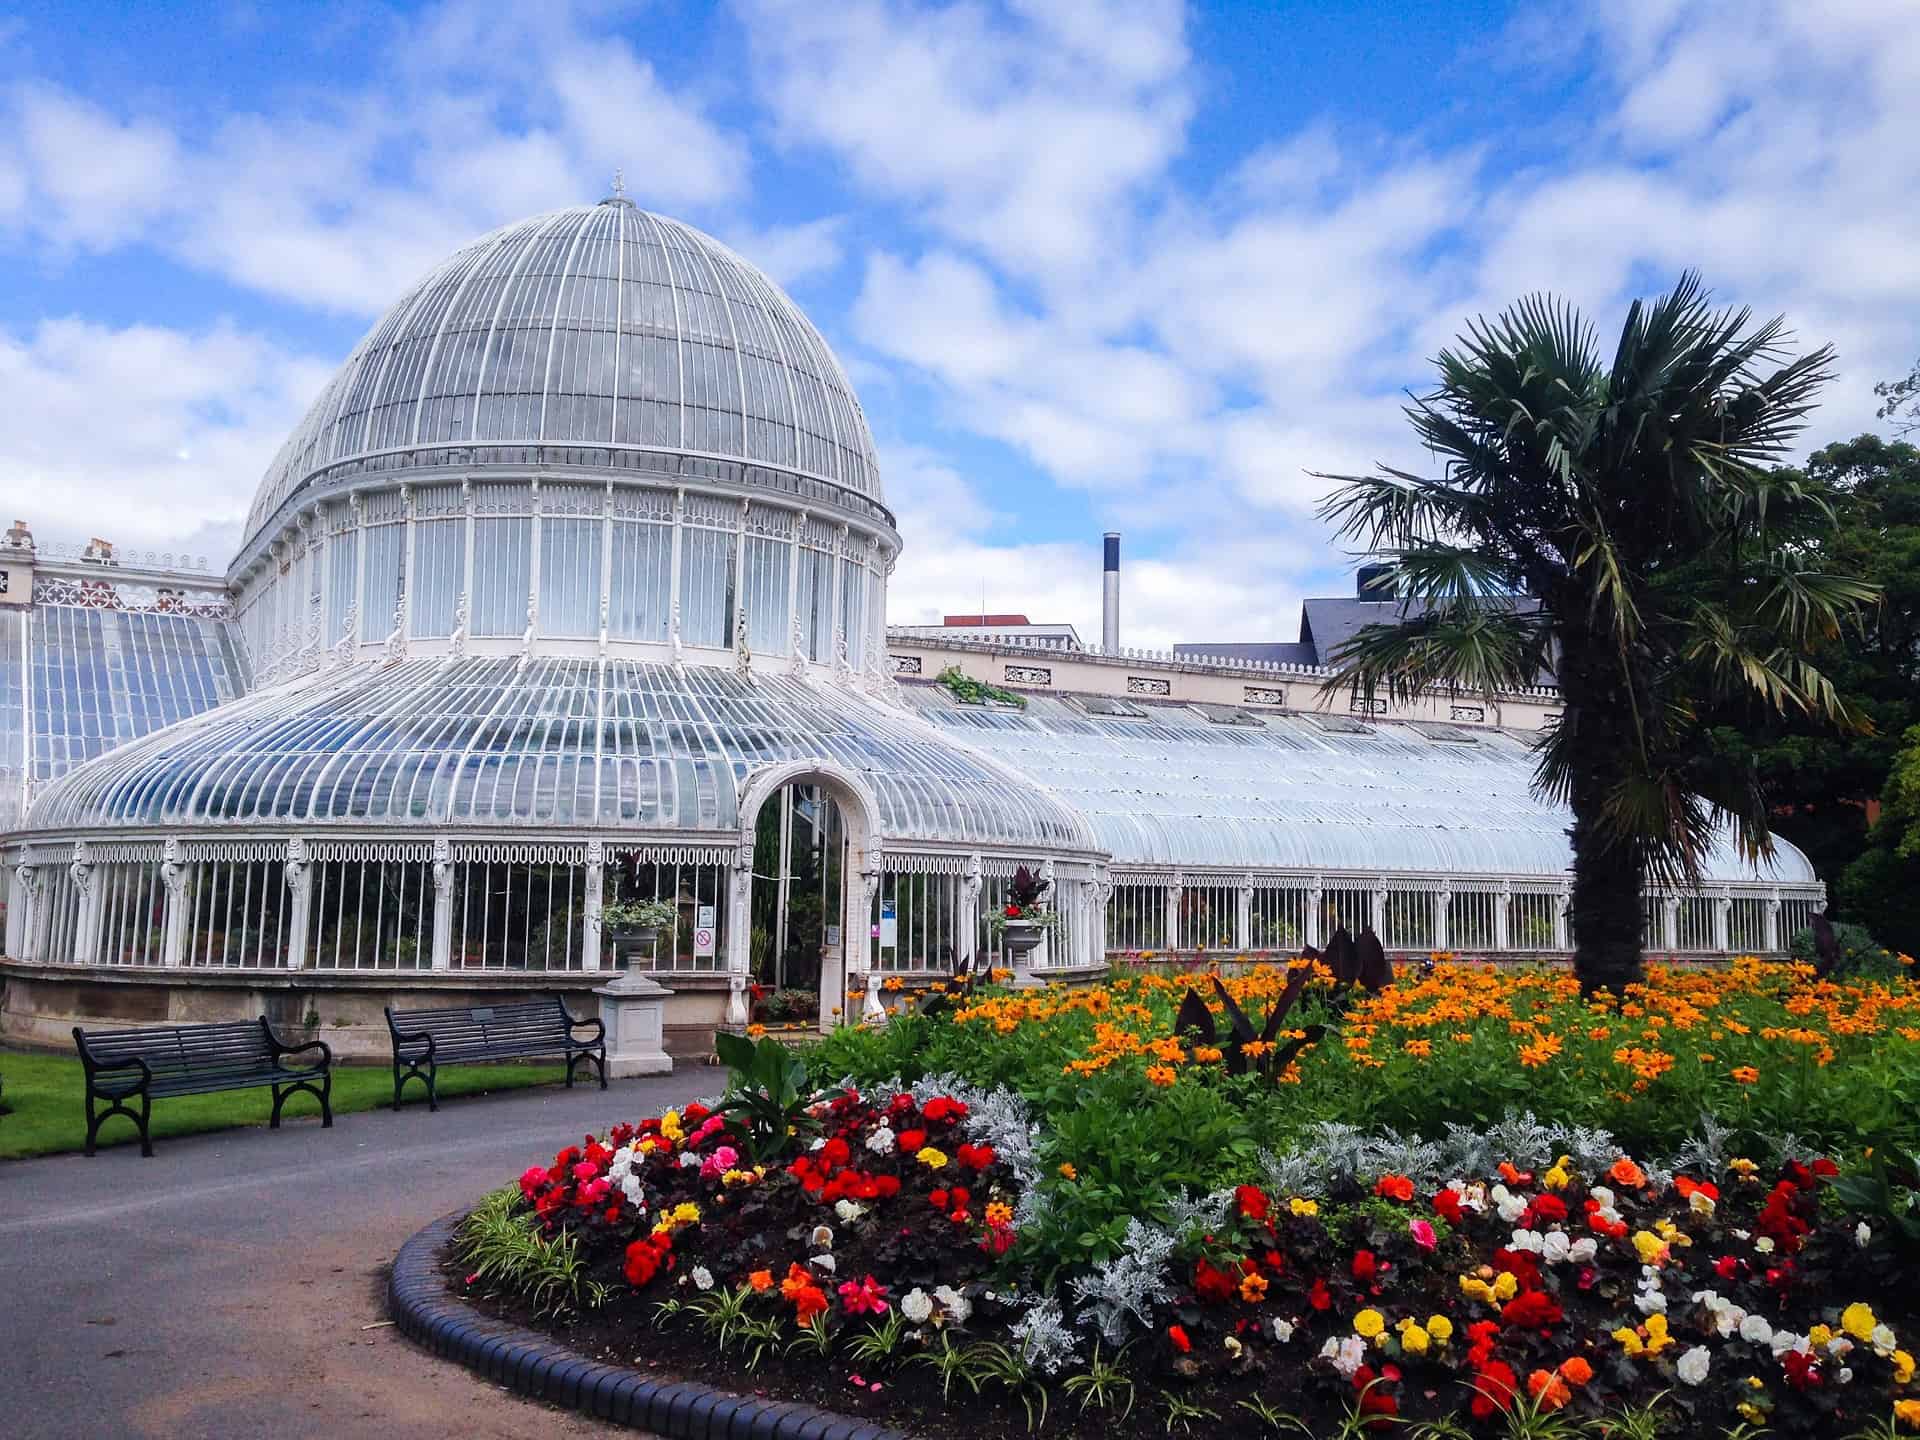 Botanic Gardens is Belfast gift for natural lovers